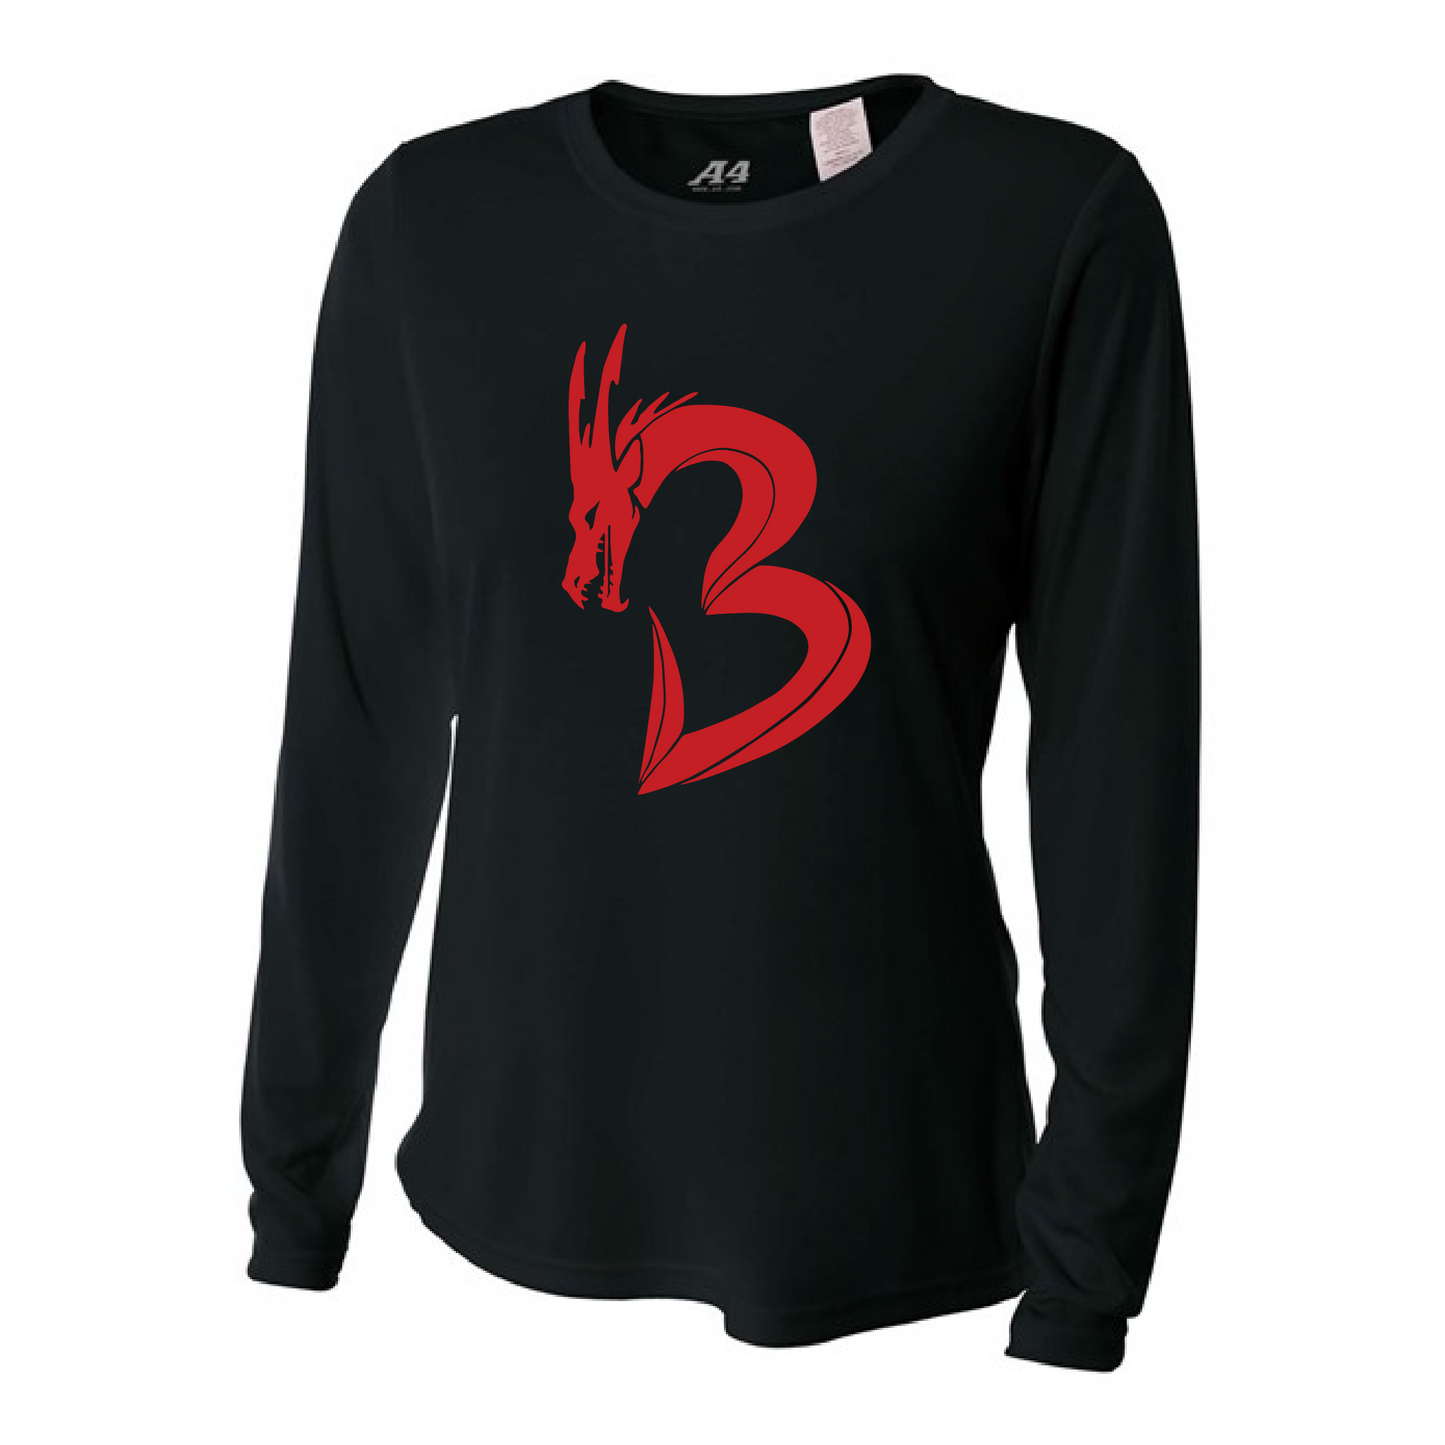 Womens L/S T-Shirt - NP Bands "B" Dragon (red)